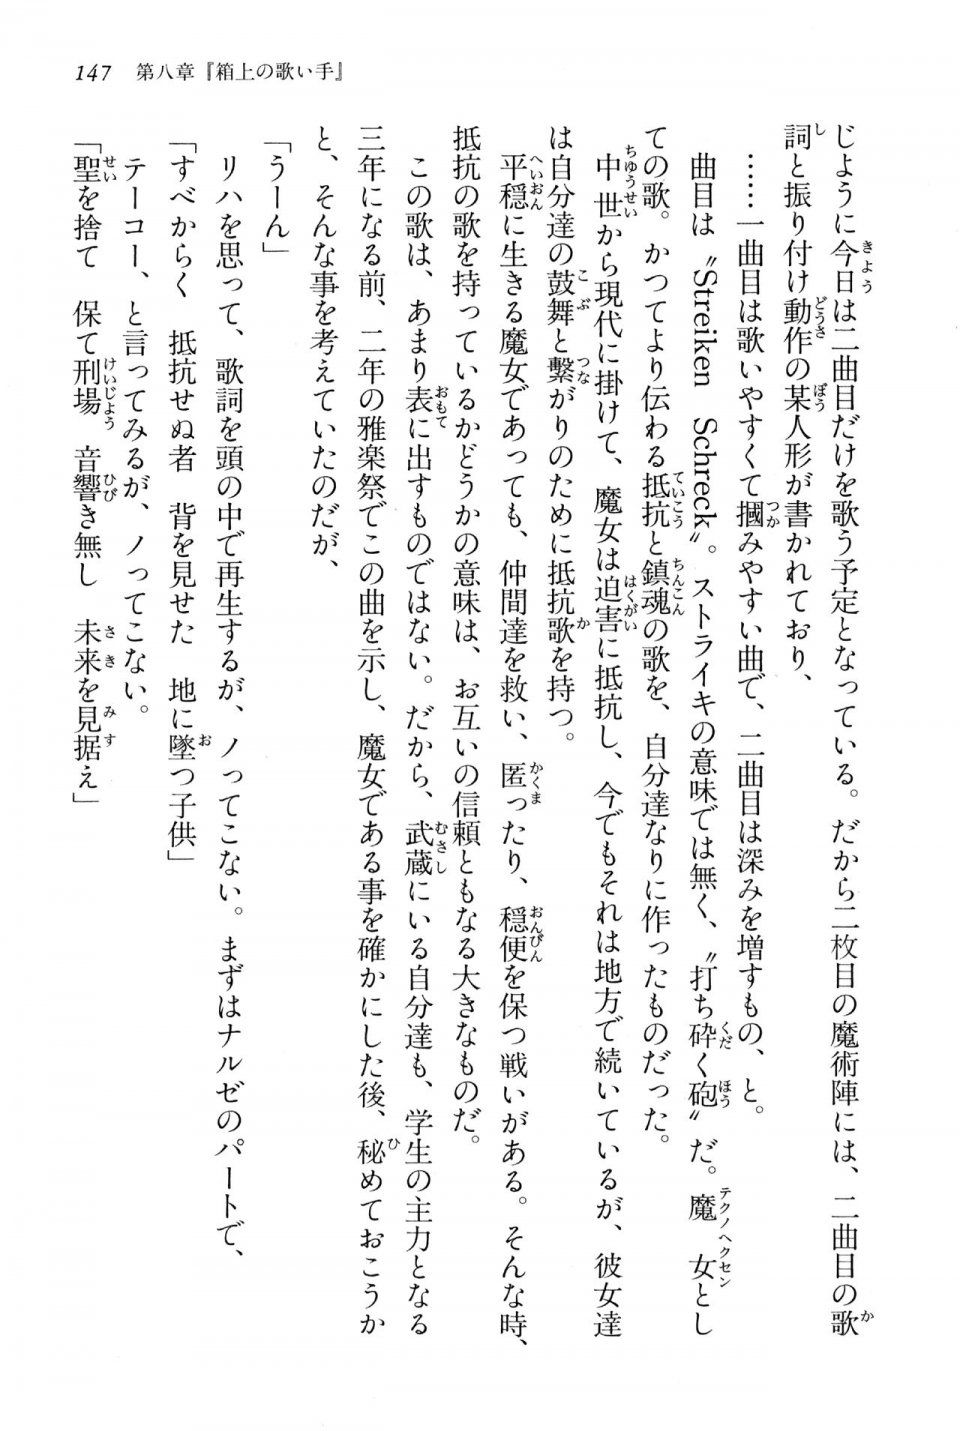 Kyoukai Senjou no Horizon BD Special Mininovel Vol 2(1B) - Photo #151